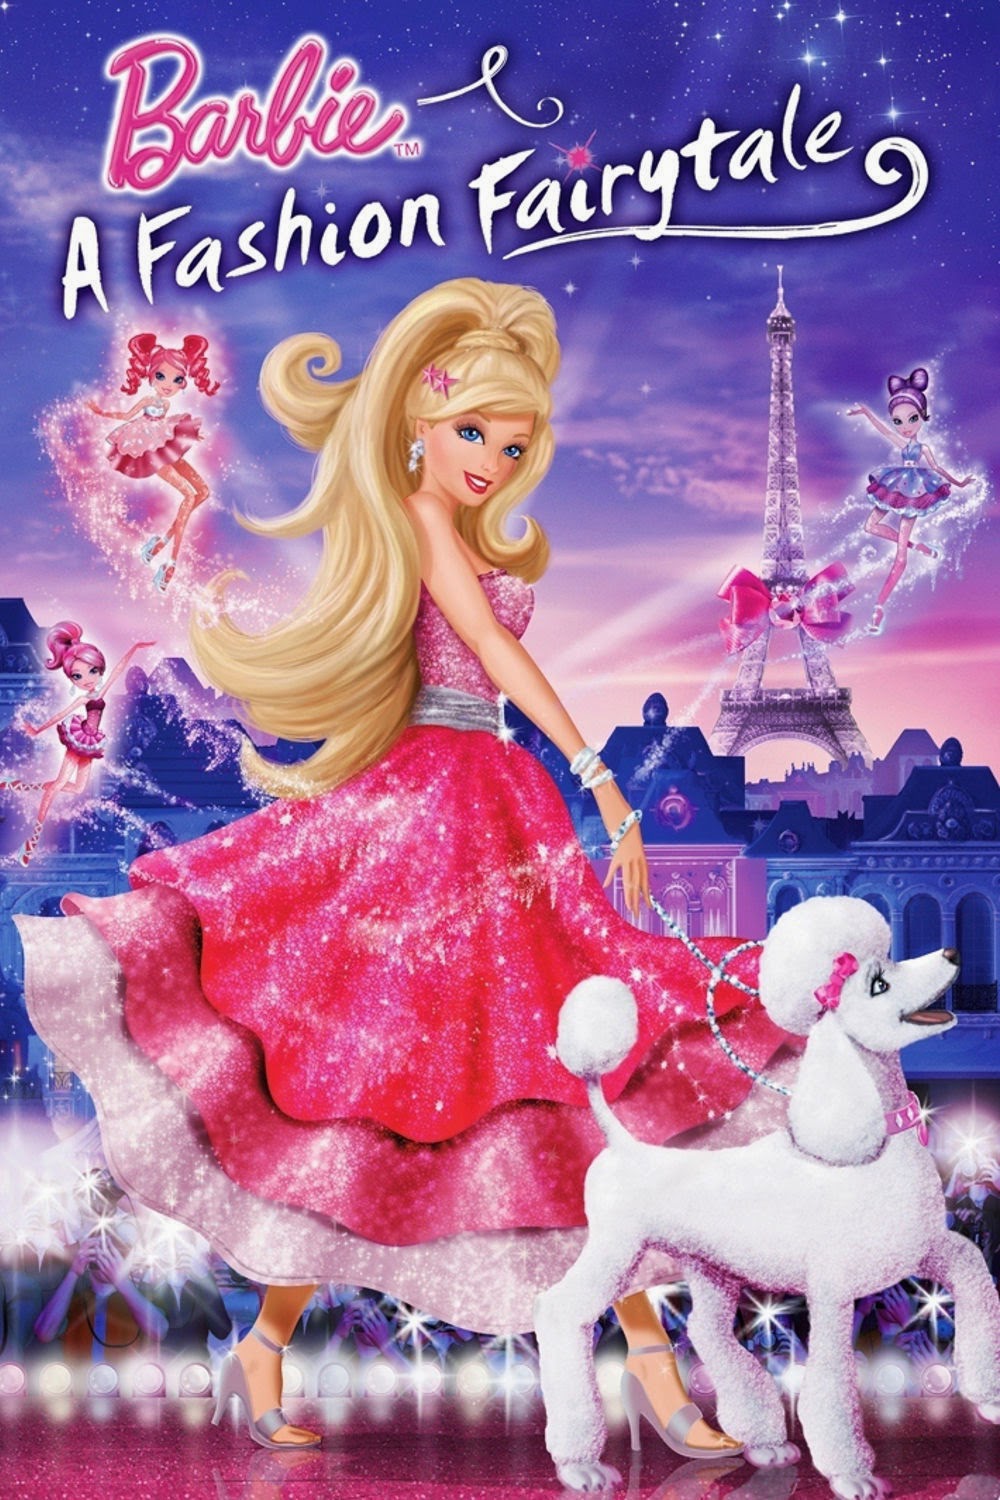 Watch Barbie: A Fashion Fairy Tale (2010) Full Movie Online